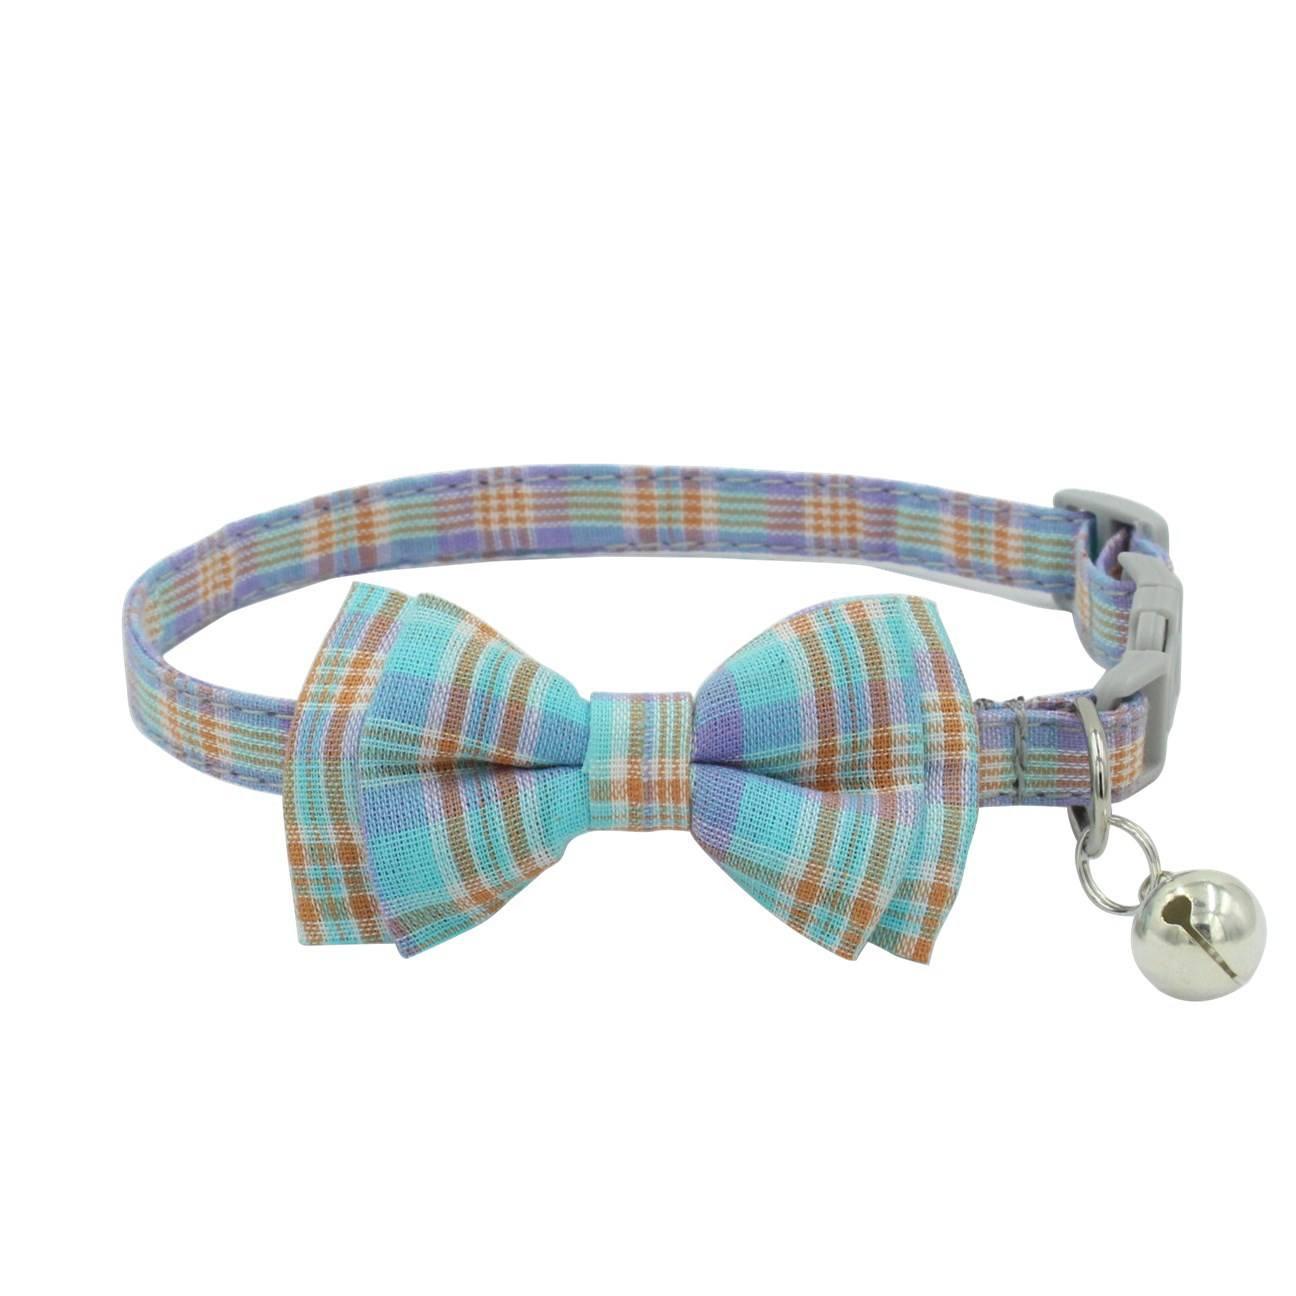 Adjustable Nylon Pet Cat Collar Cat Necklace Bells Cat Collar Bow Tie